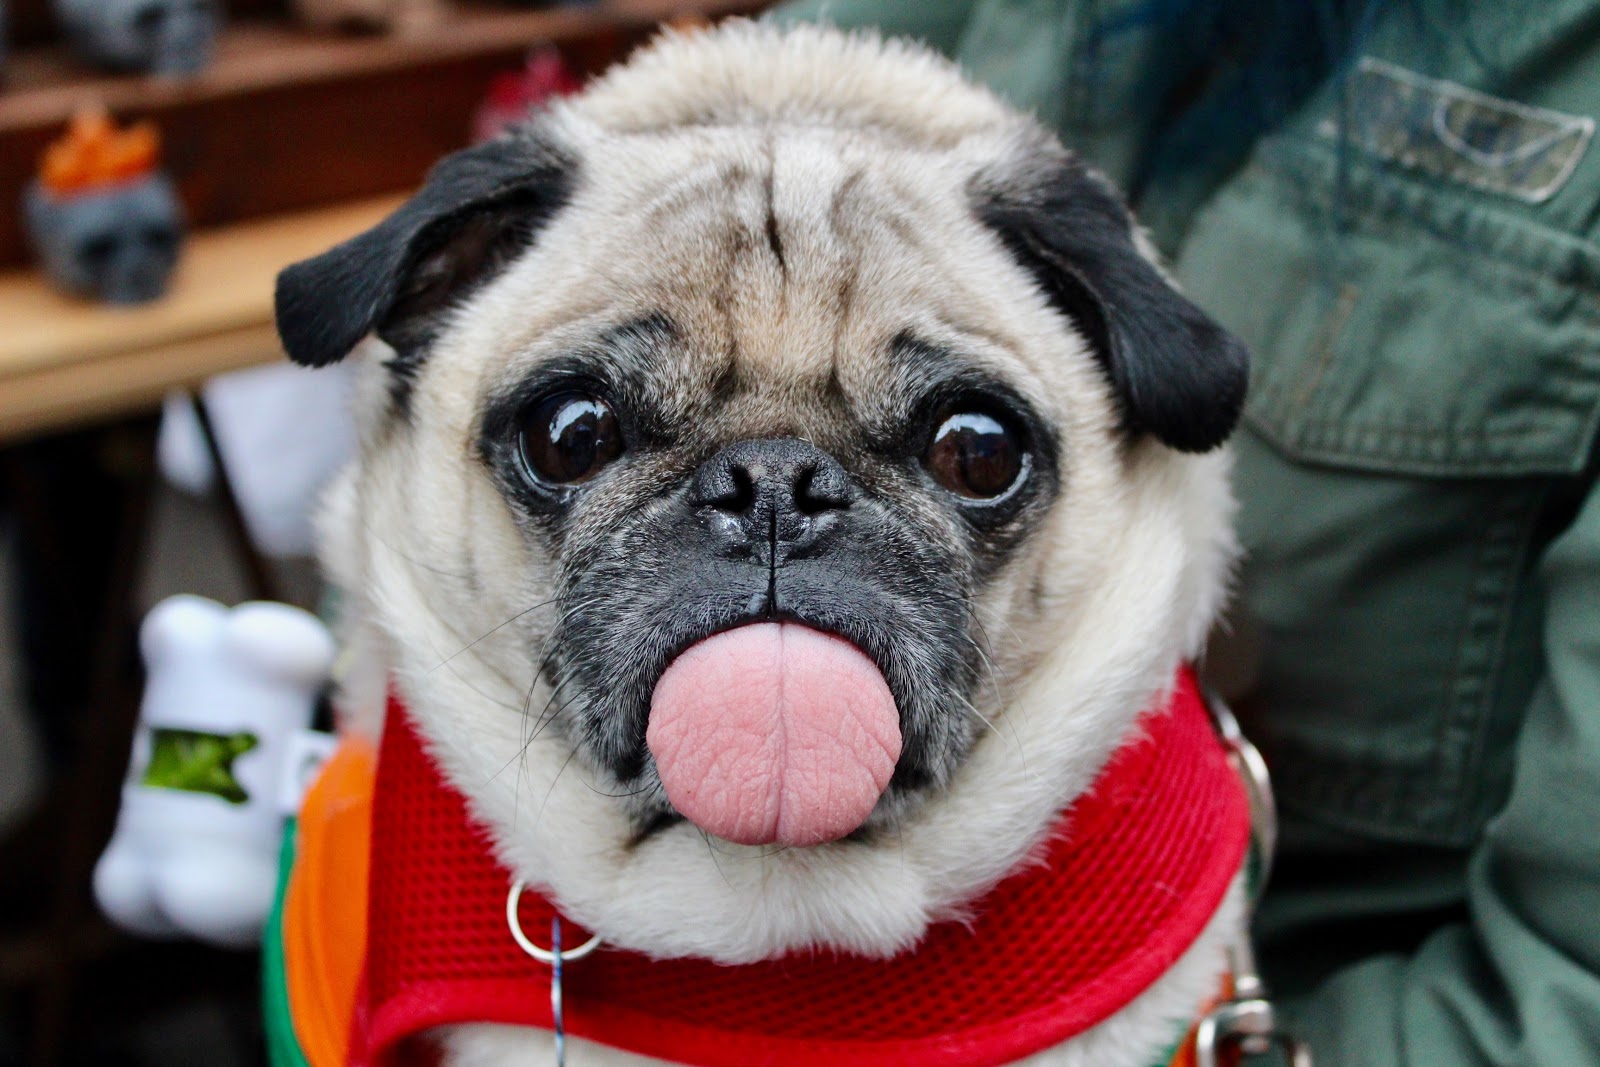 A pug sticks his tongue out at the camera